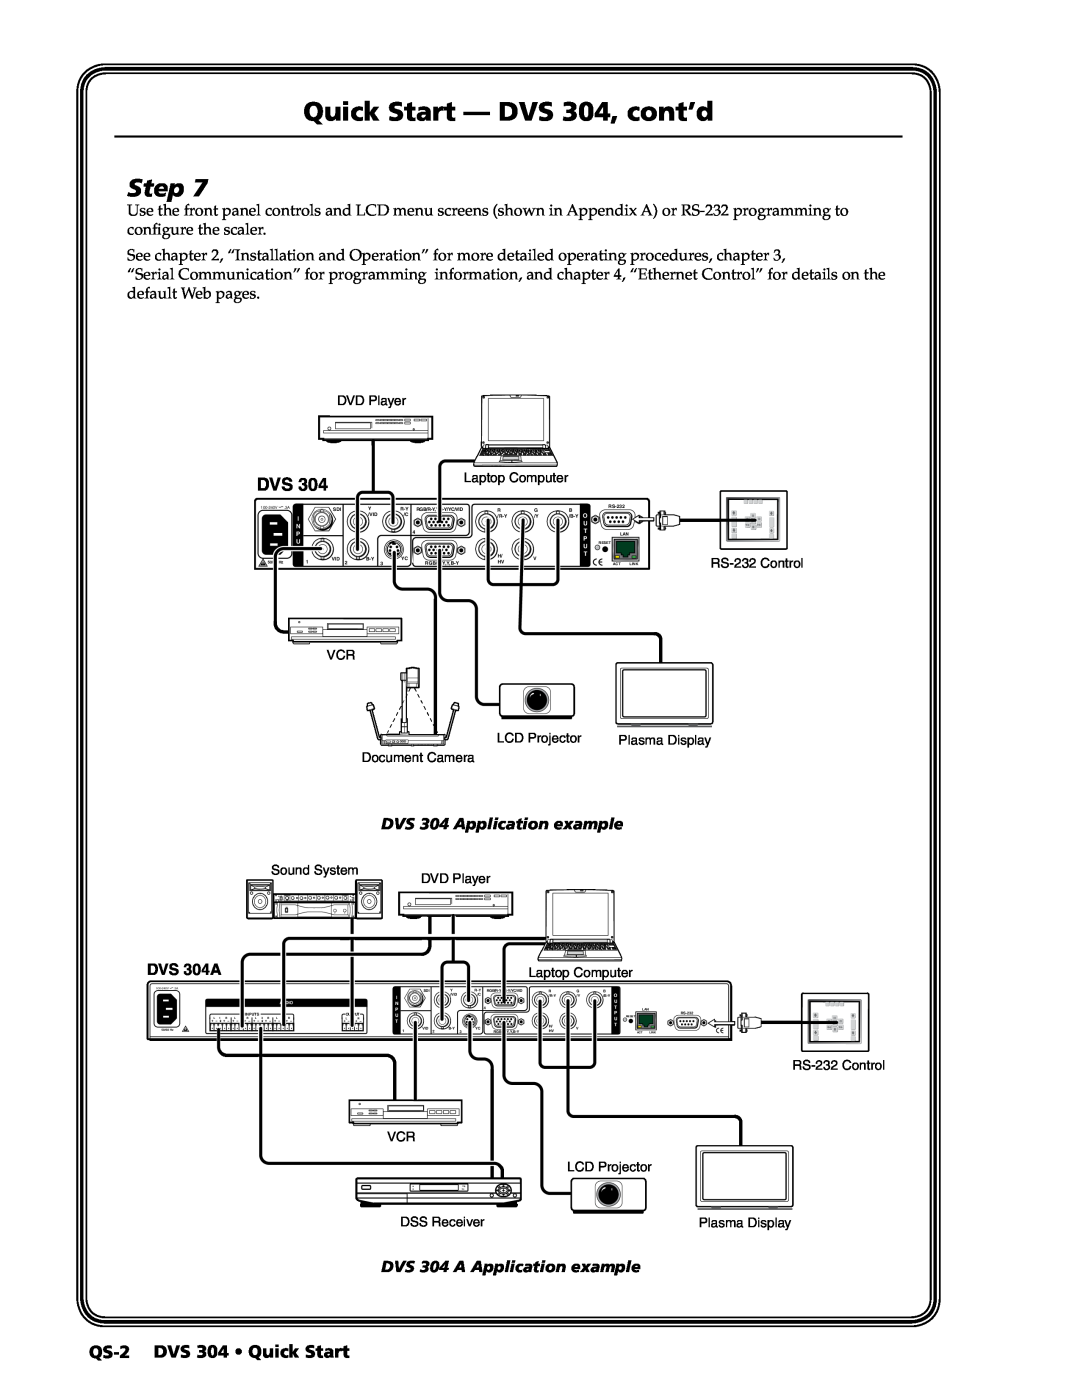 Extron electronic DVS 304 AD, DVS 304 D manual Quick Start - DVS 304, cont’d, Step, DVS 304 Application example, DVS 304A 